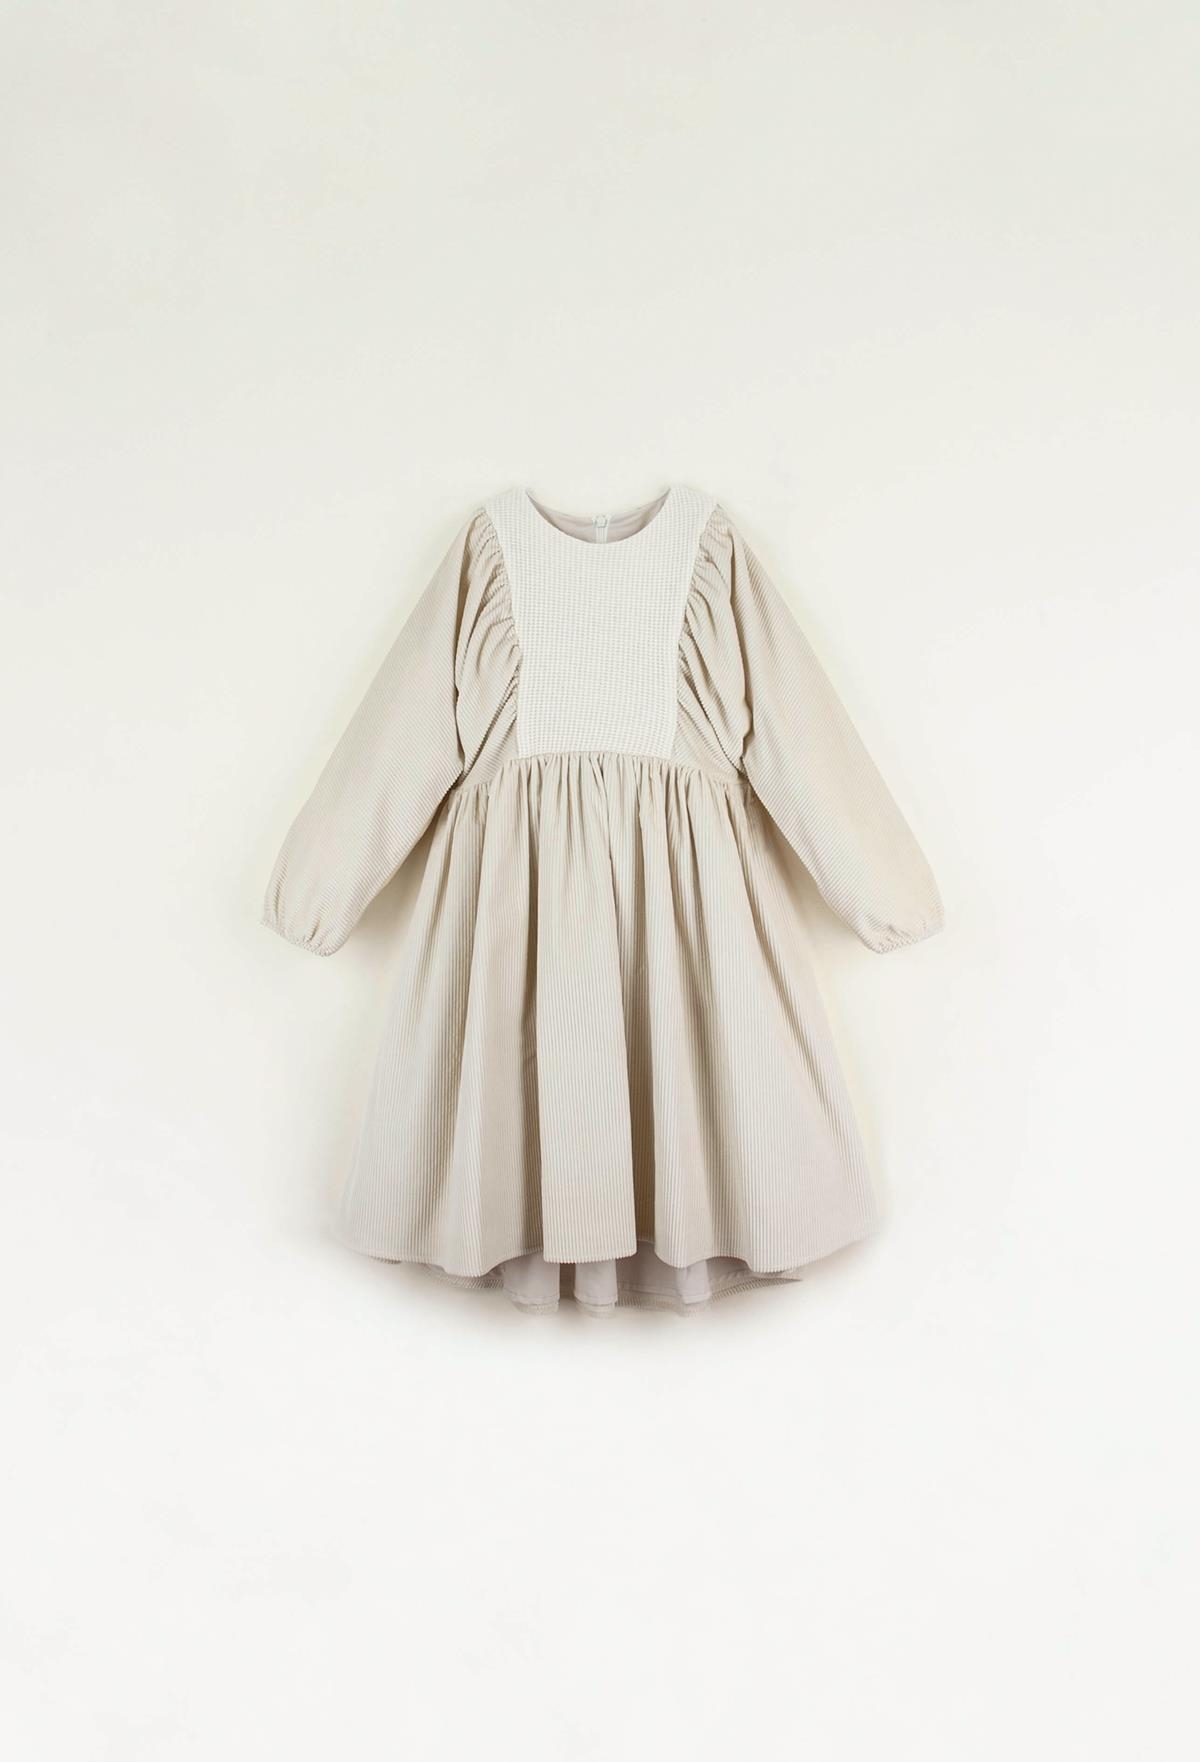 Mod.30.1 Off-white dress with yoke | AW22.23 Mod.30.1 Off-white dress with yoke